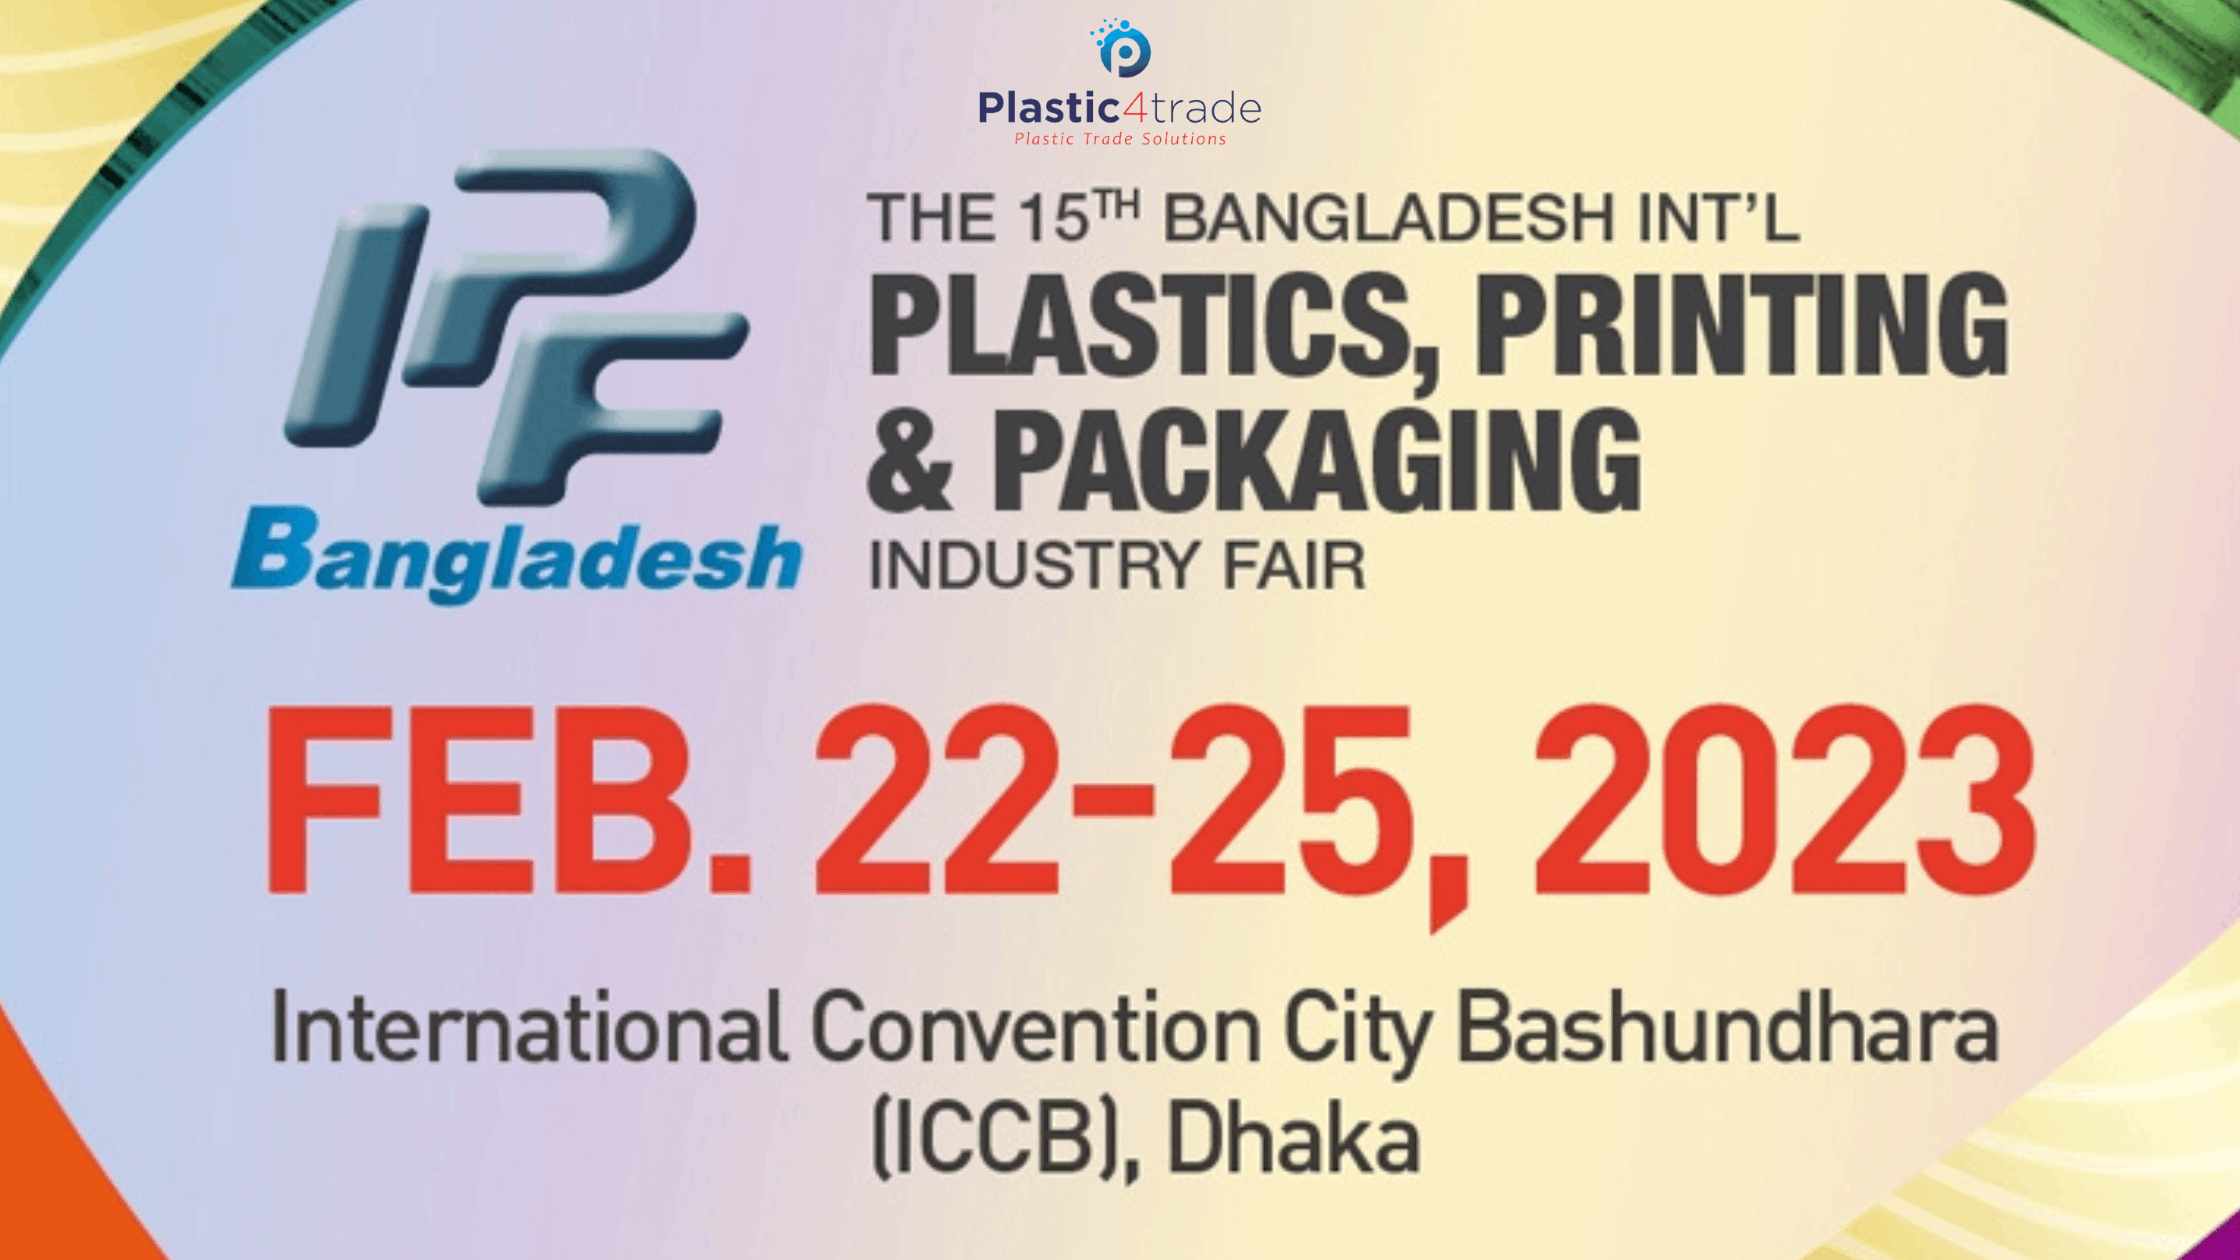 IPF Bangladesh 2023 Plastics, Printing and Packaging Exhibition Plastic4trade